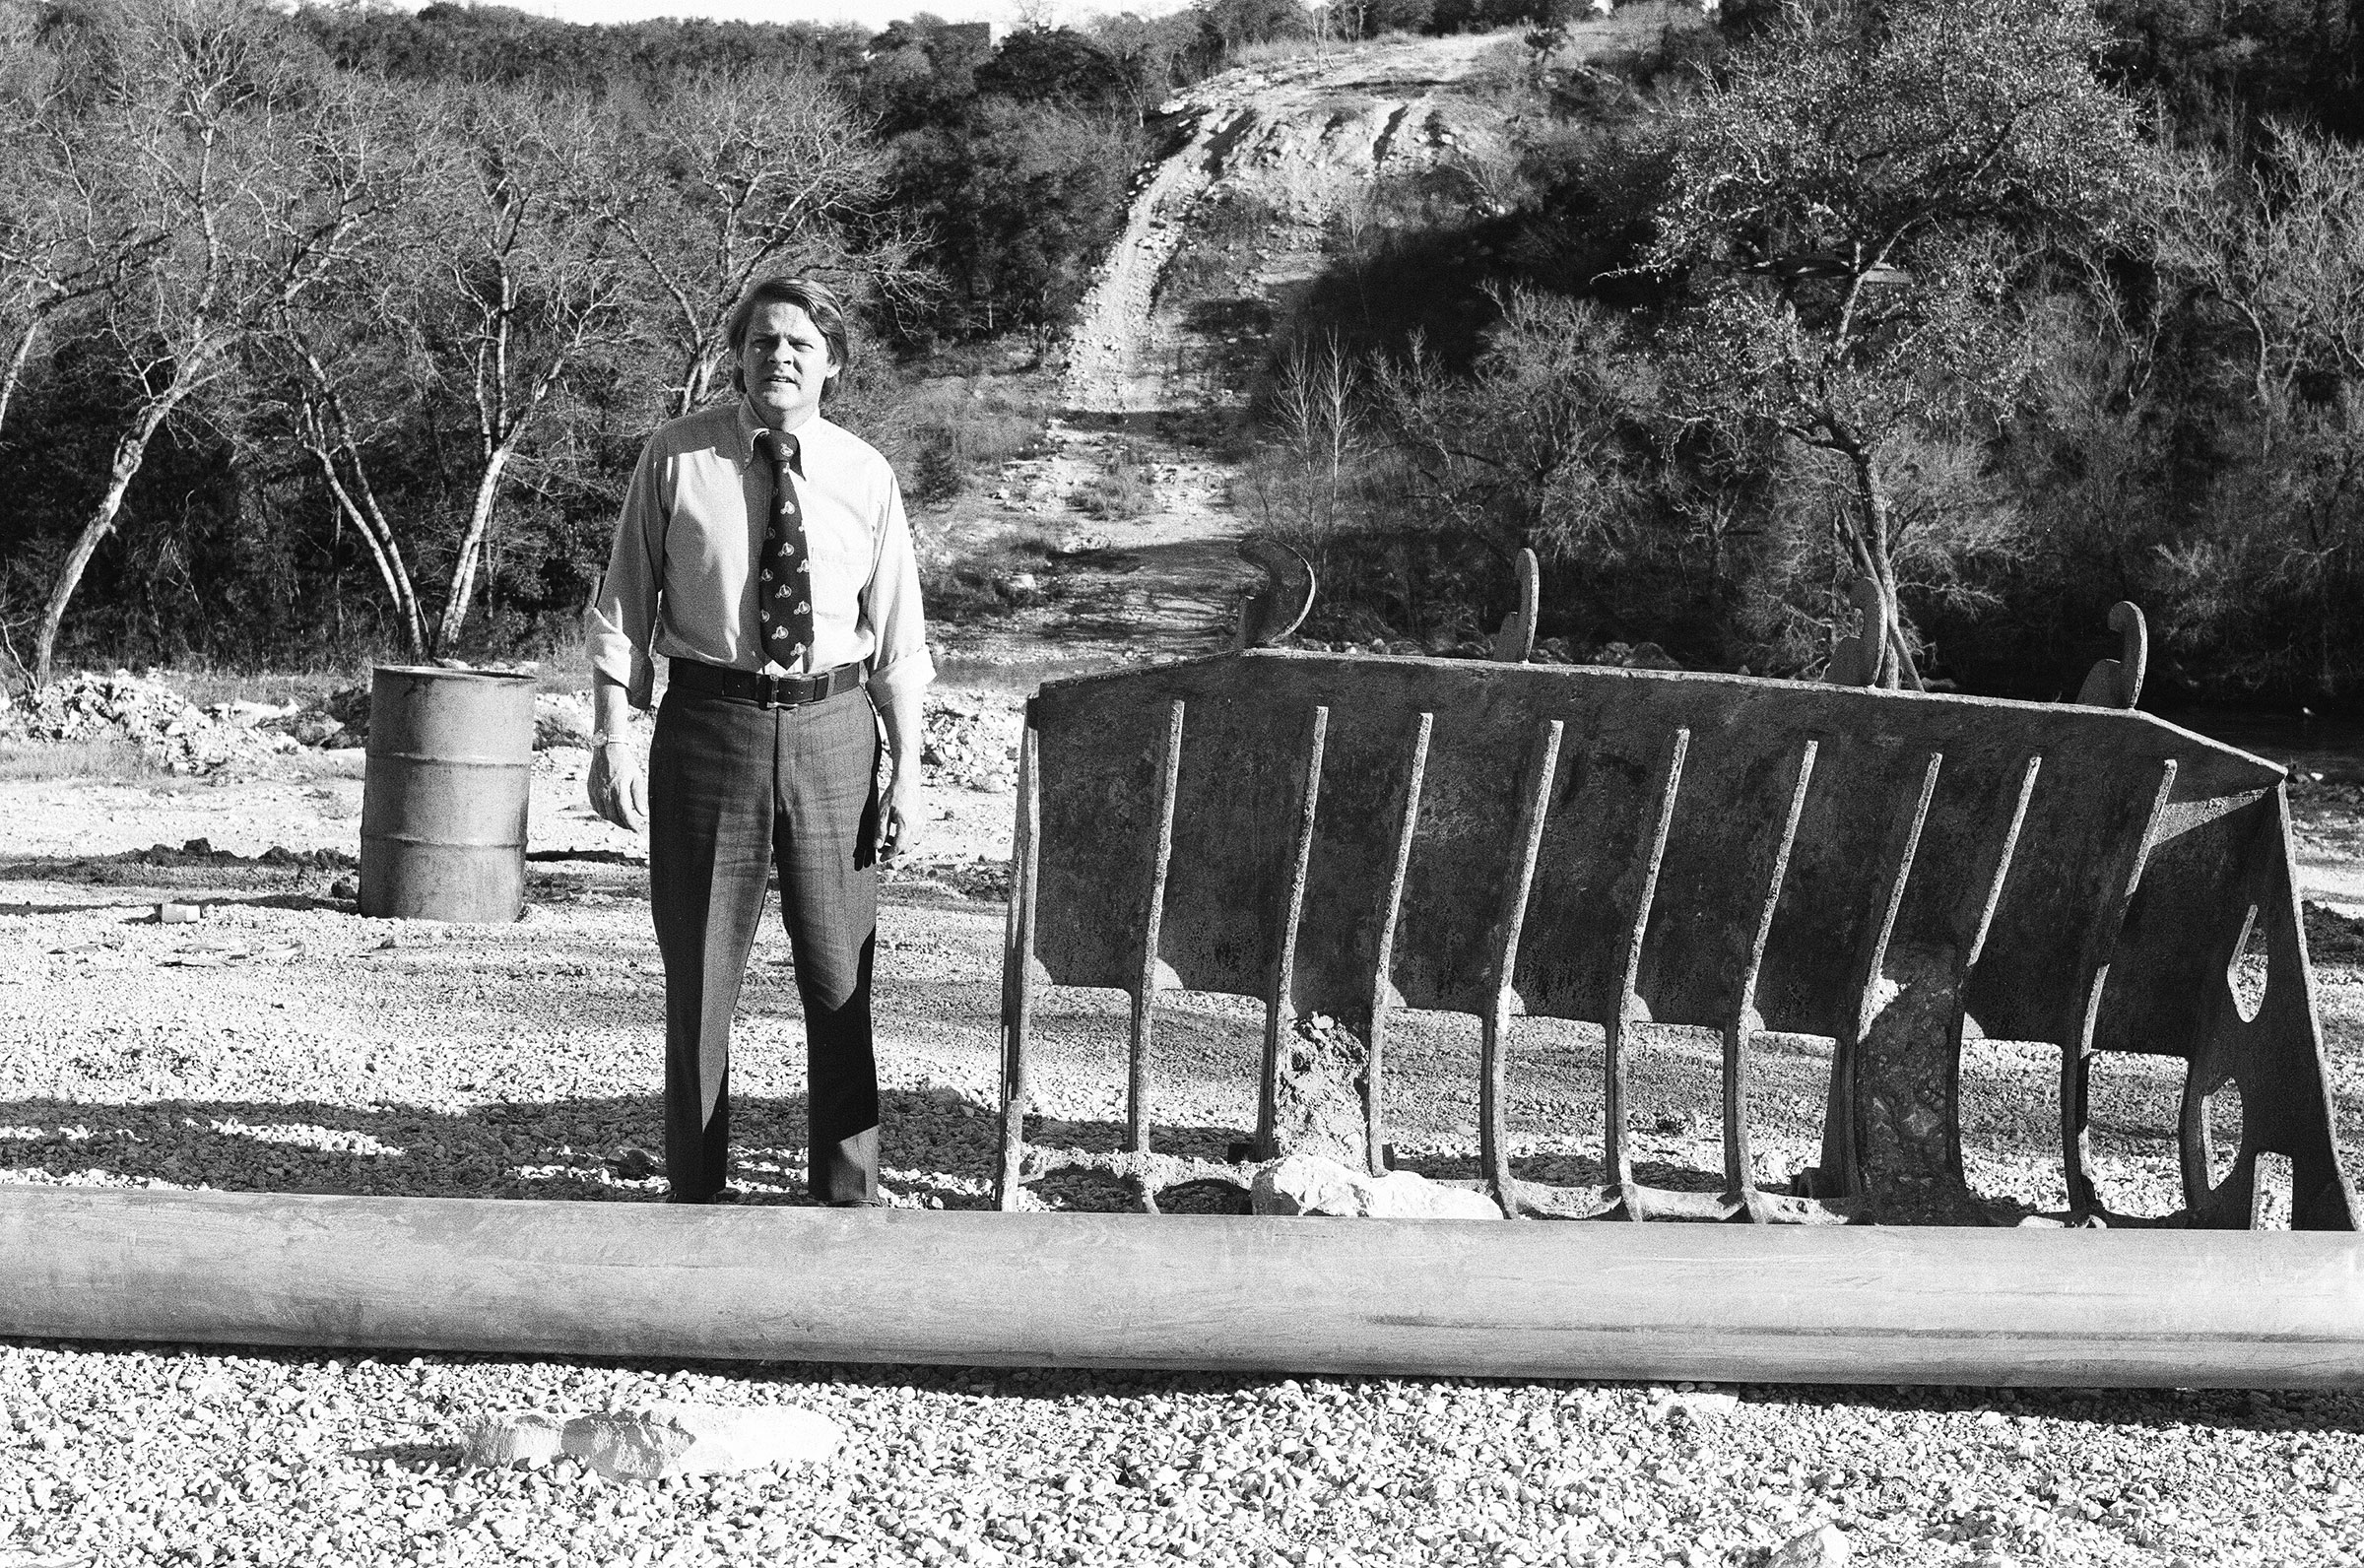 Stuart Henry, Austin's First Environmental Director (Austin American-Statesman, 1972)